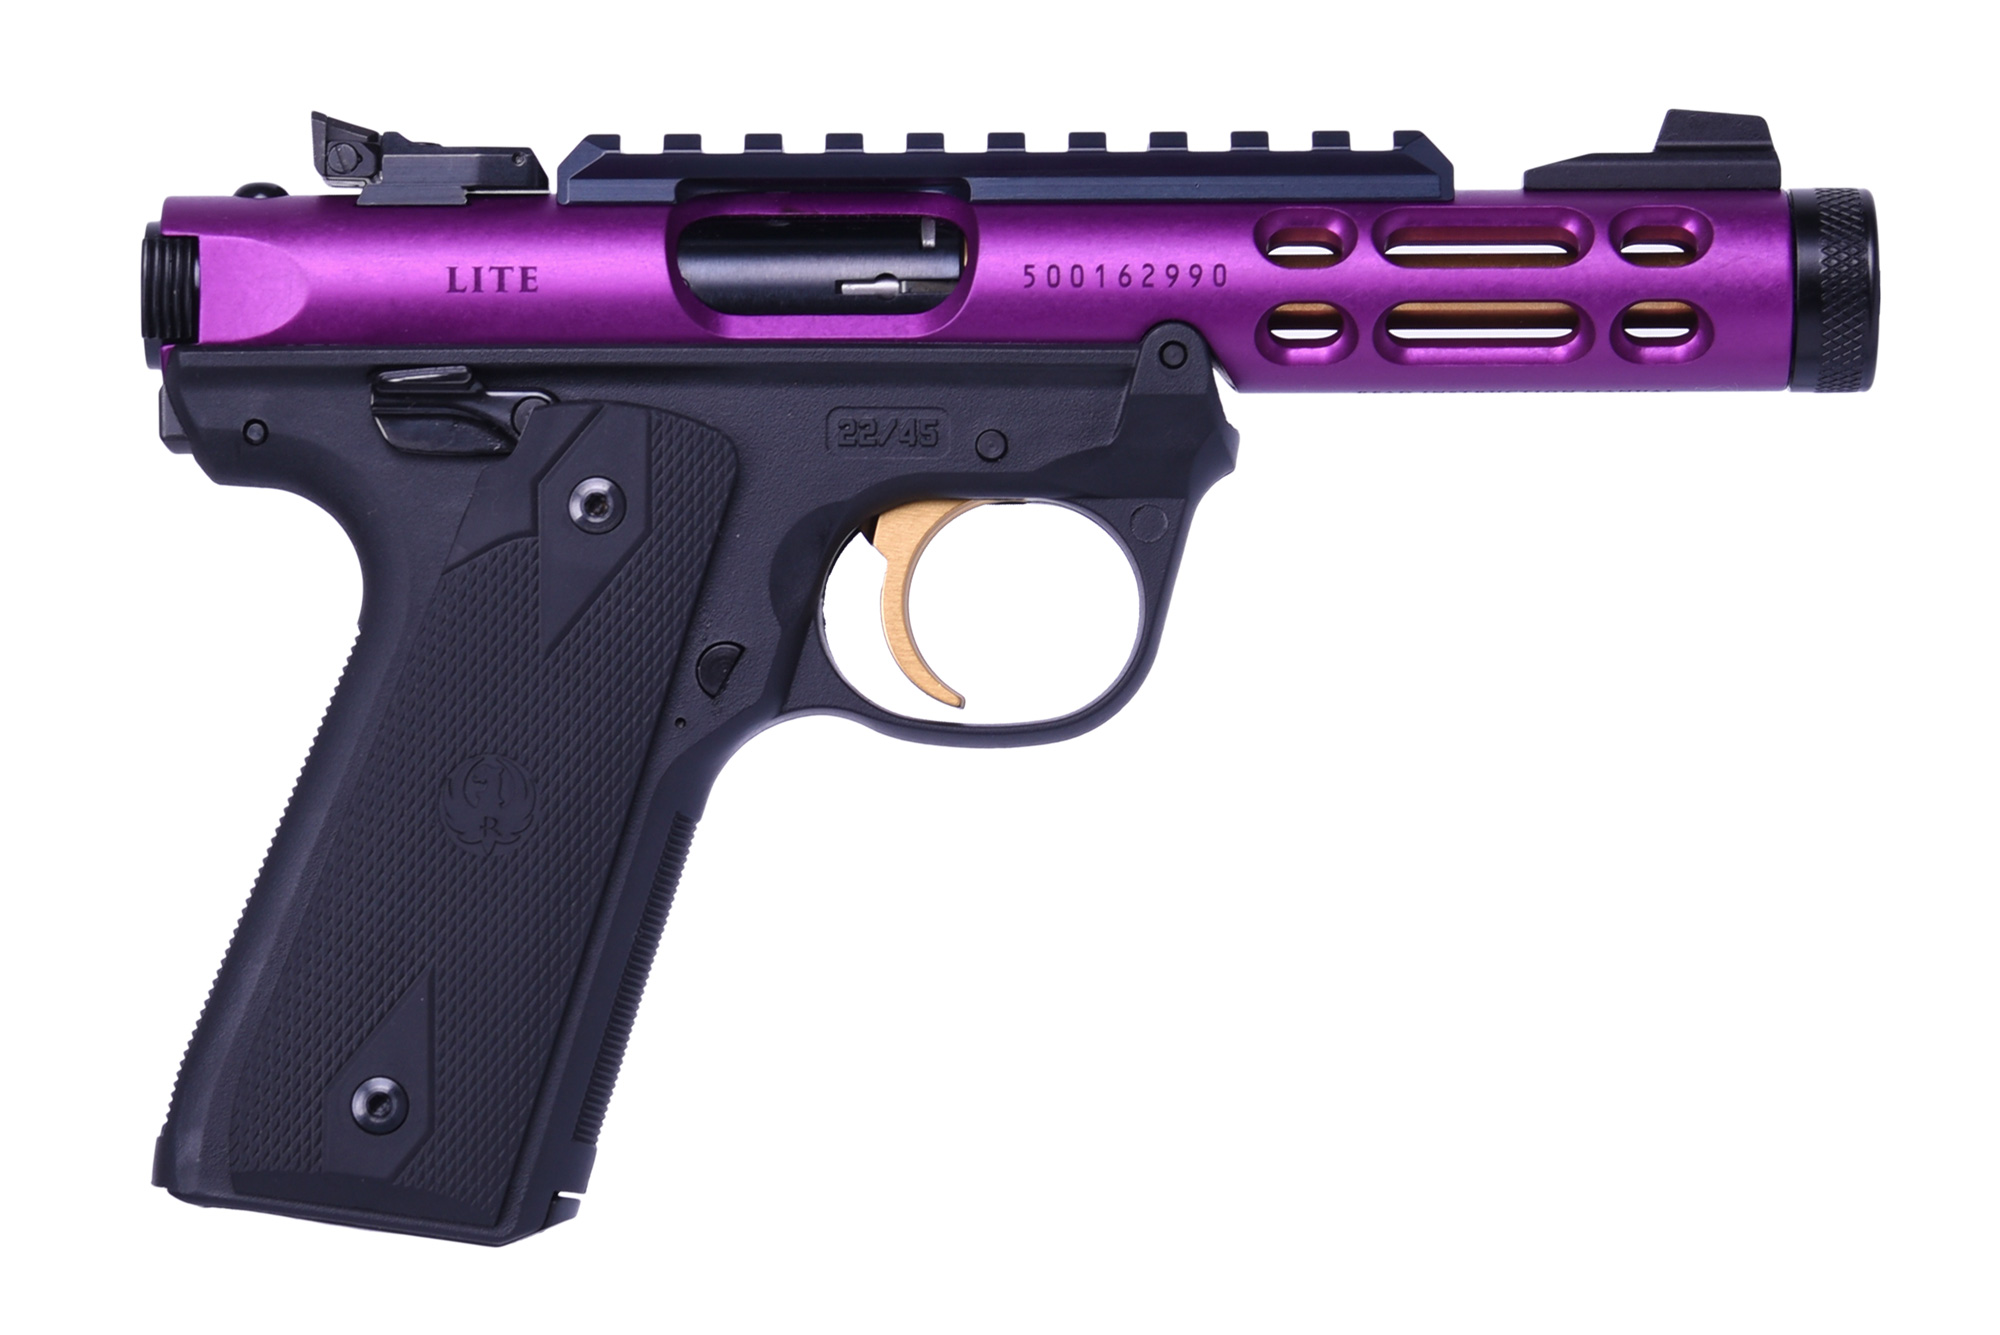 https://cityarsenal.com/product/ruger-mrk-iv-22-45-lite-22lr-pistol-exclusive-purple-and-gold-finish-43931/